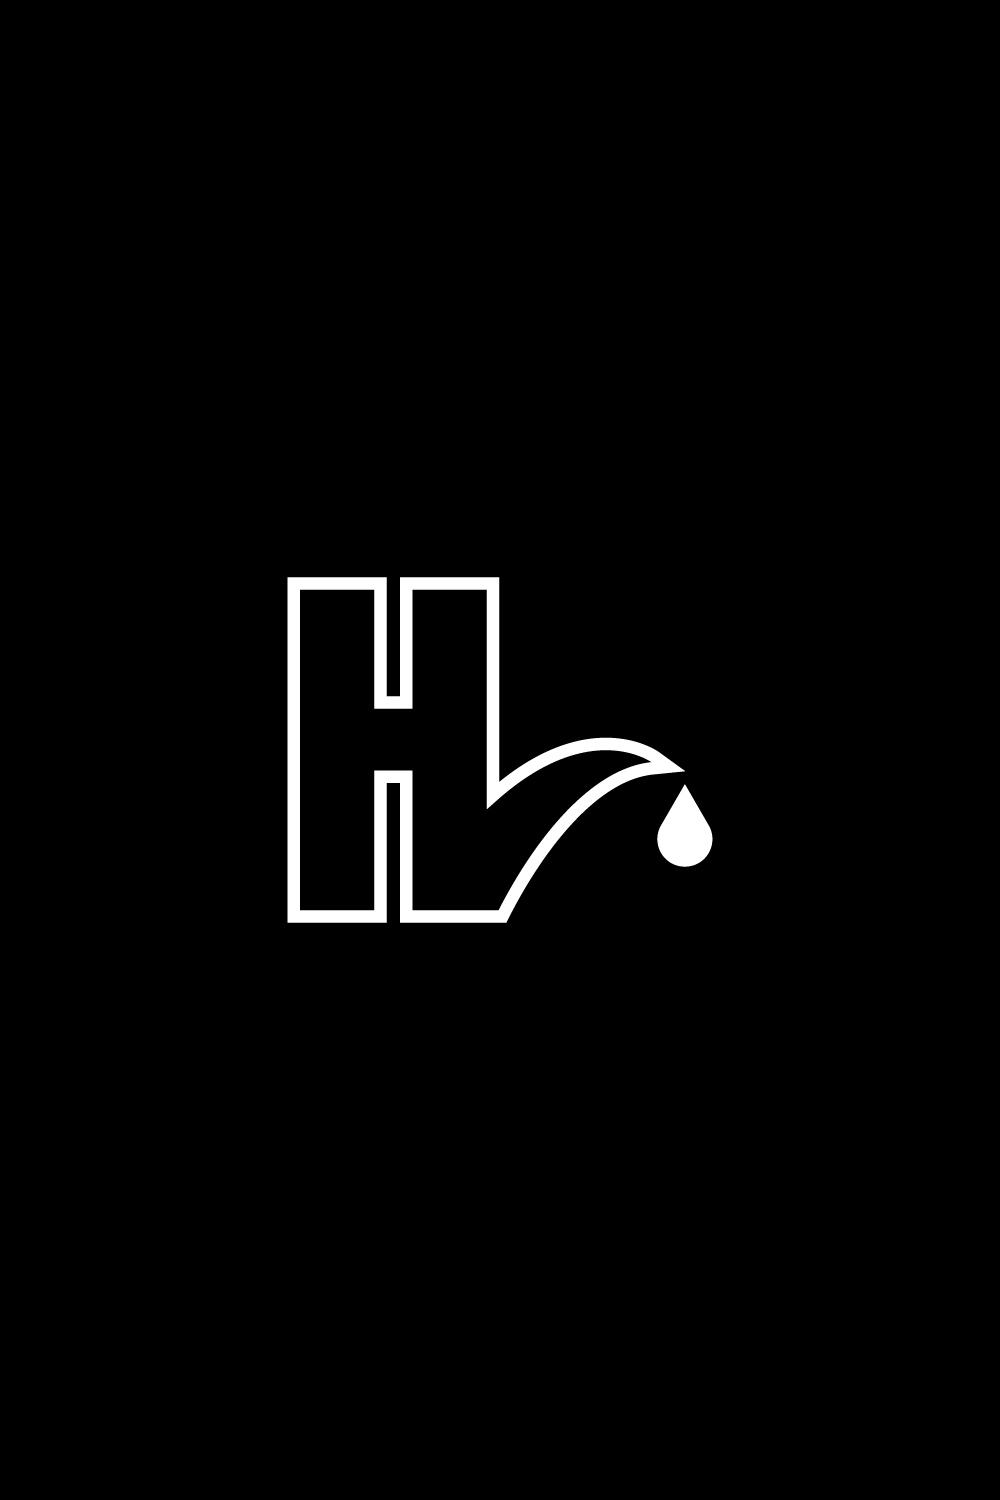 H Letter Logo pinterest preview image.